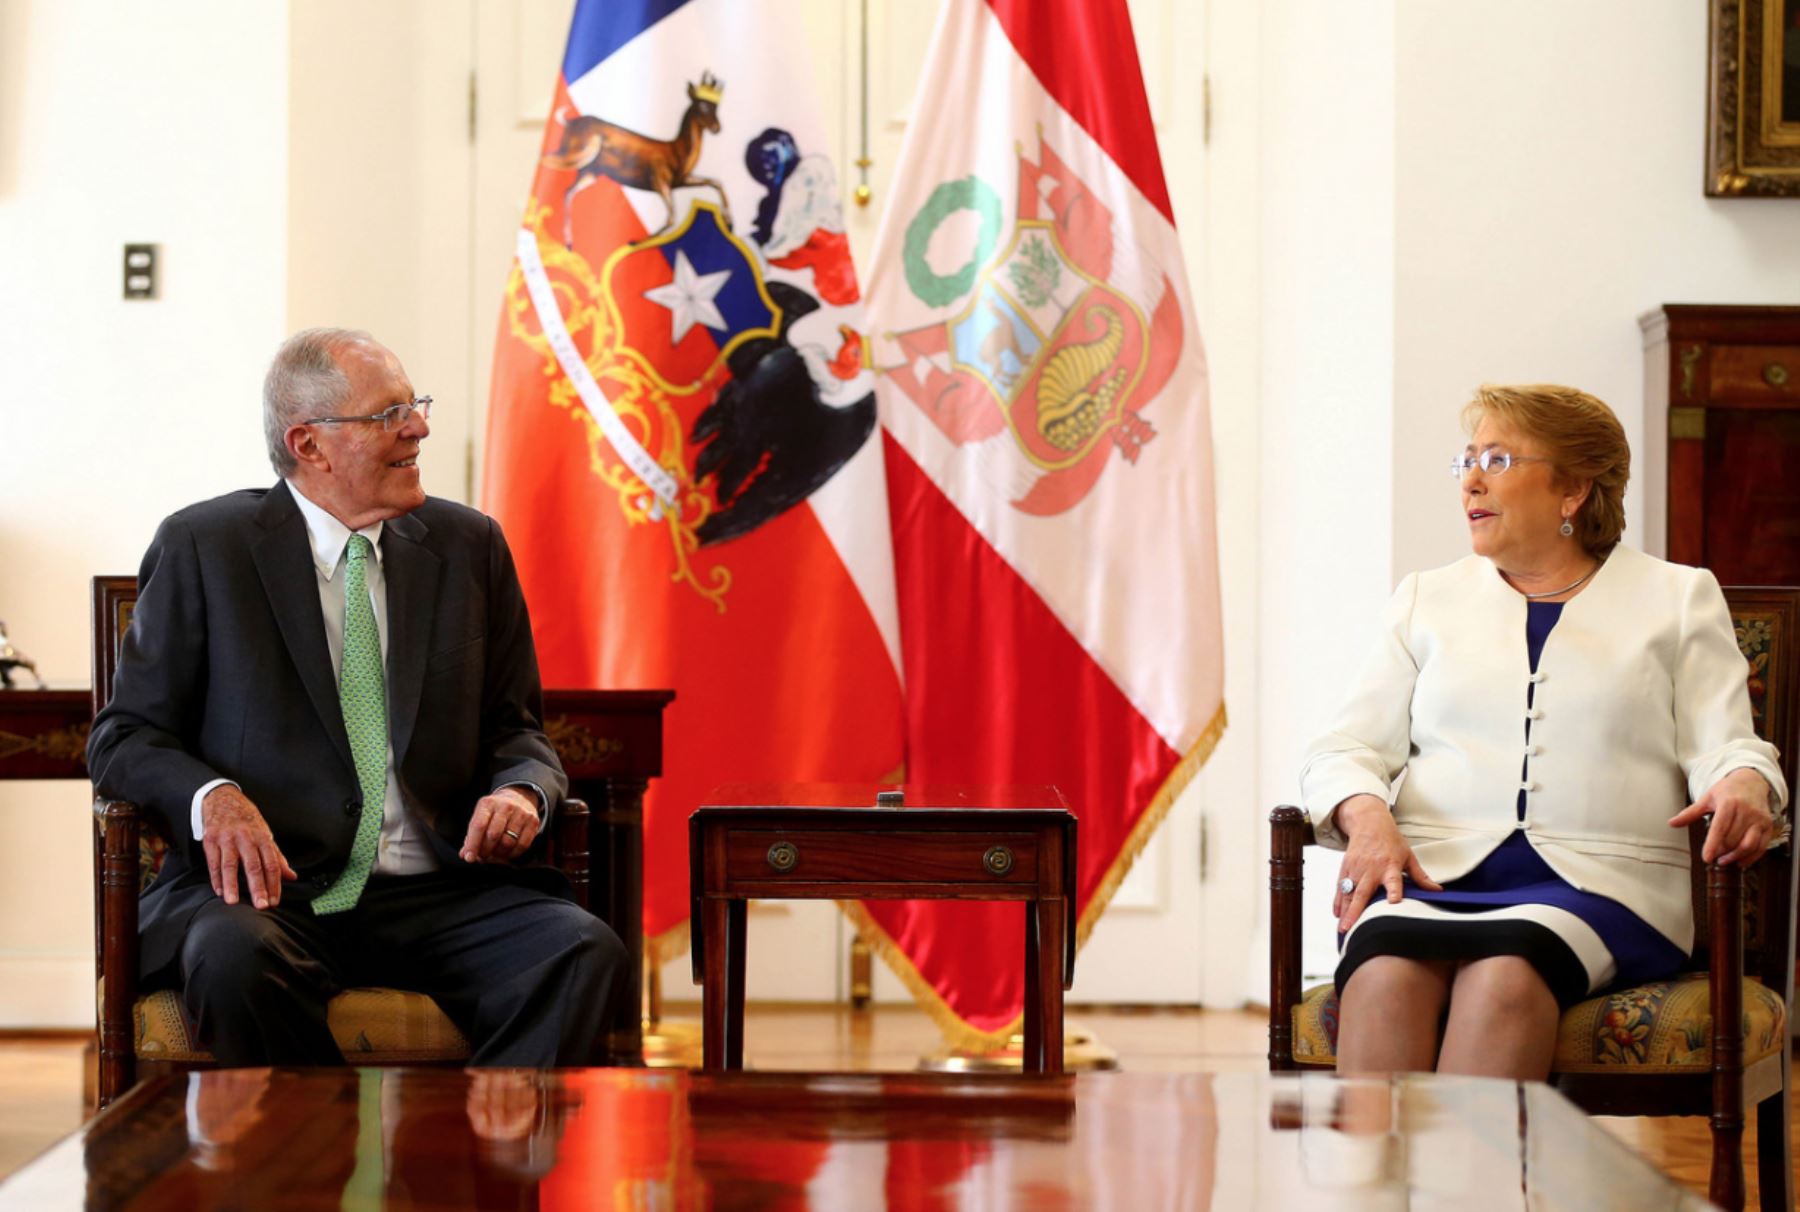 El jefe del Estado peruano, Pedro Pablo Kuczynski, se reúne con la presidenta de Chile, Michelle Bachelet en el Palacio de la Moneda. Foto:ANDINA/ Prensa Presidencia